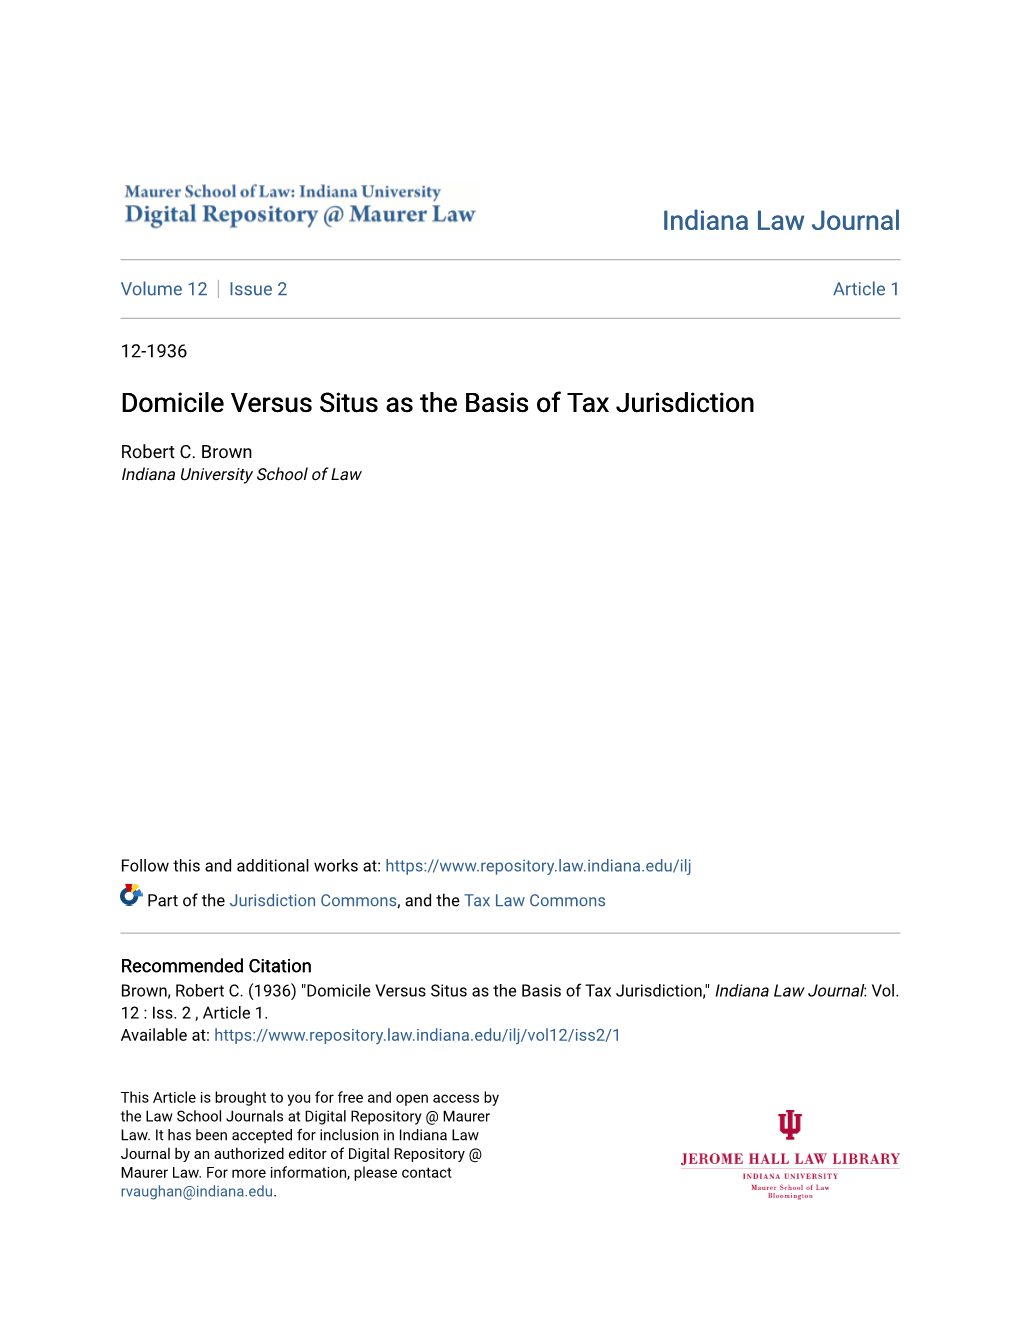 Domicile Versus Situs As the Basis of Tax Jurisdiction